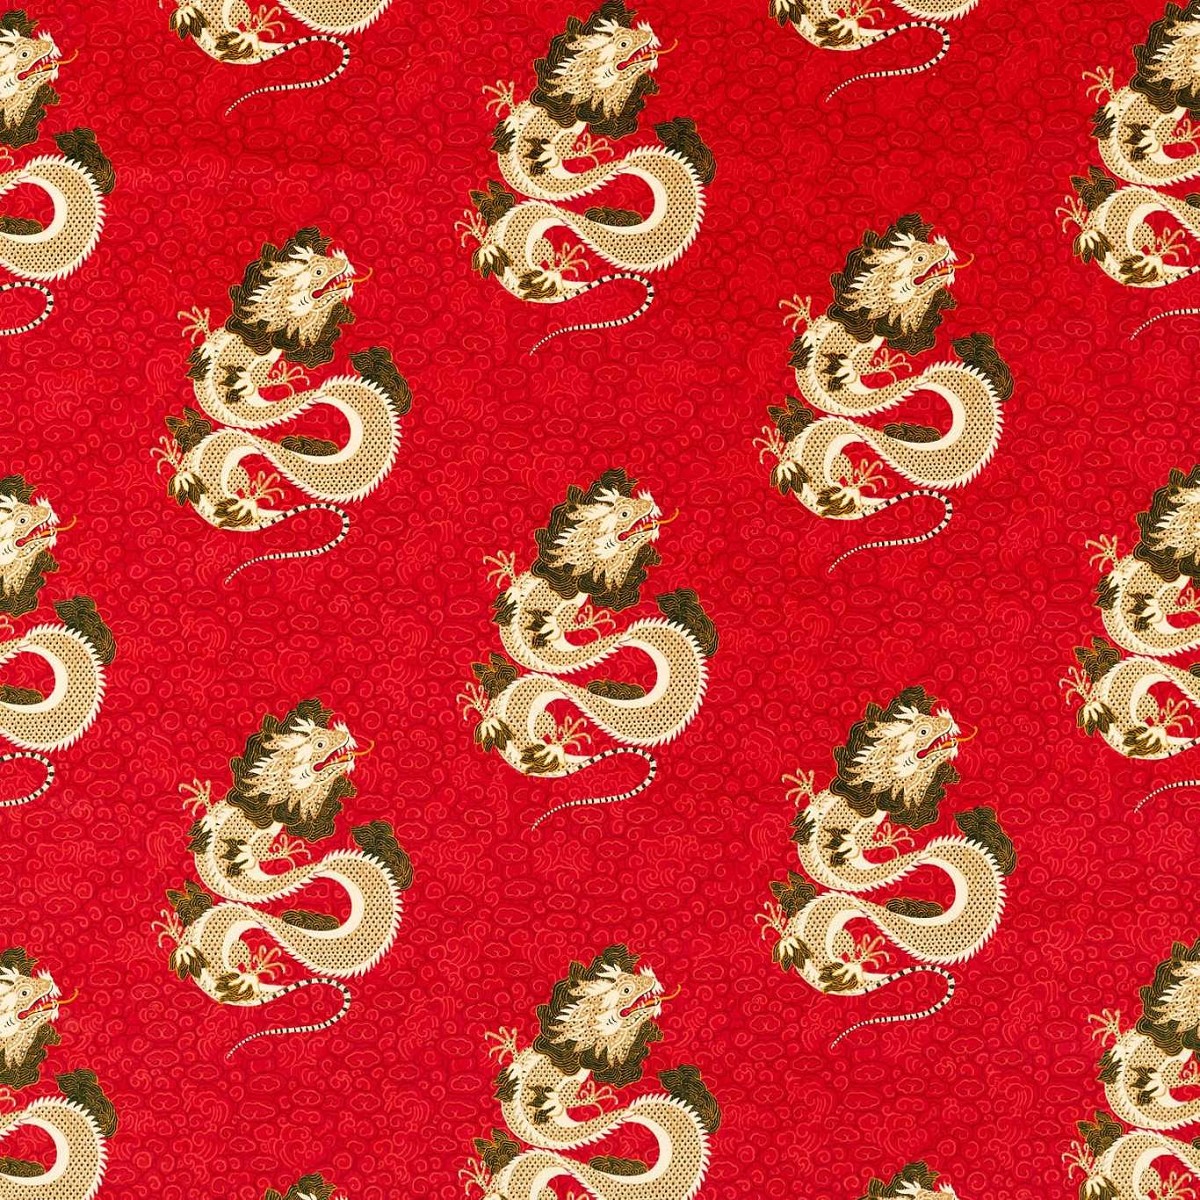 Water Dragon Cinnabar Red Fabric by Sanderson